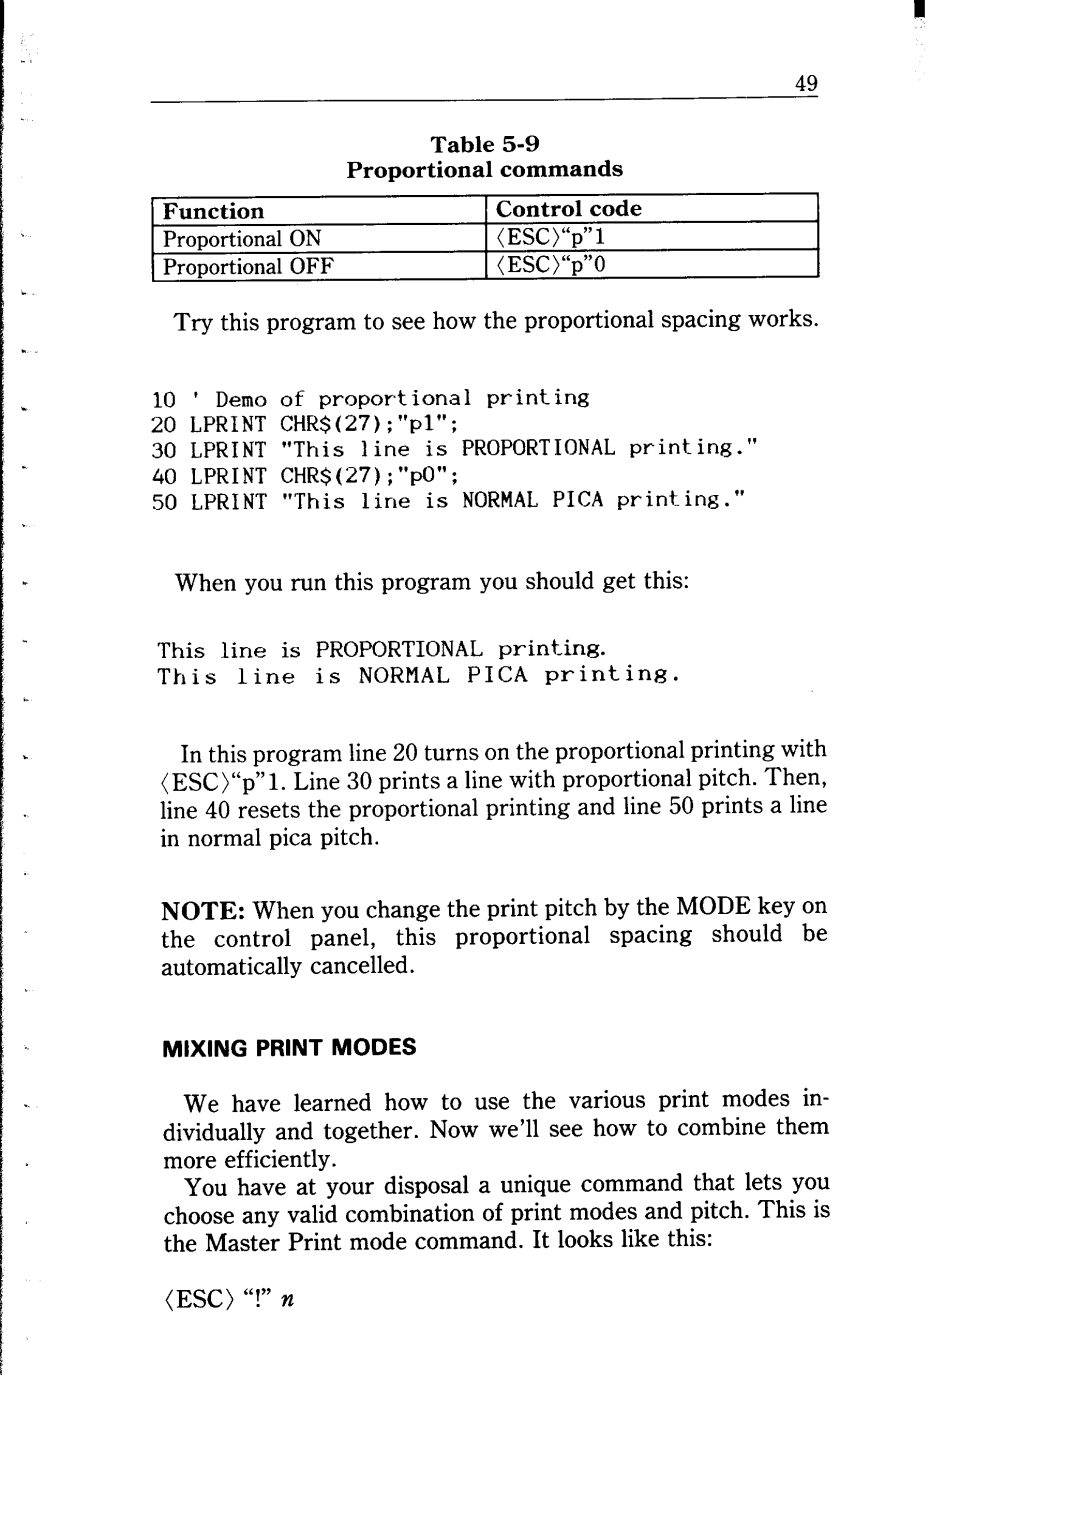 Star Micronics NB-15 user manual Mixing Print Modes 